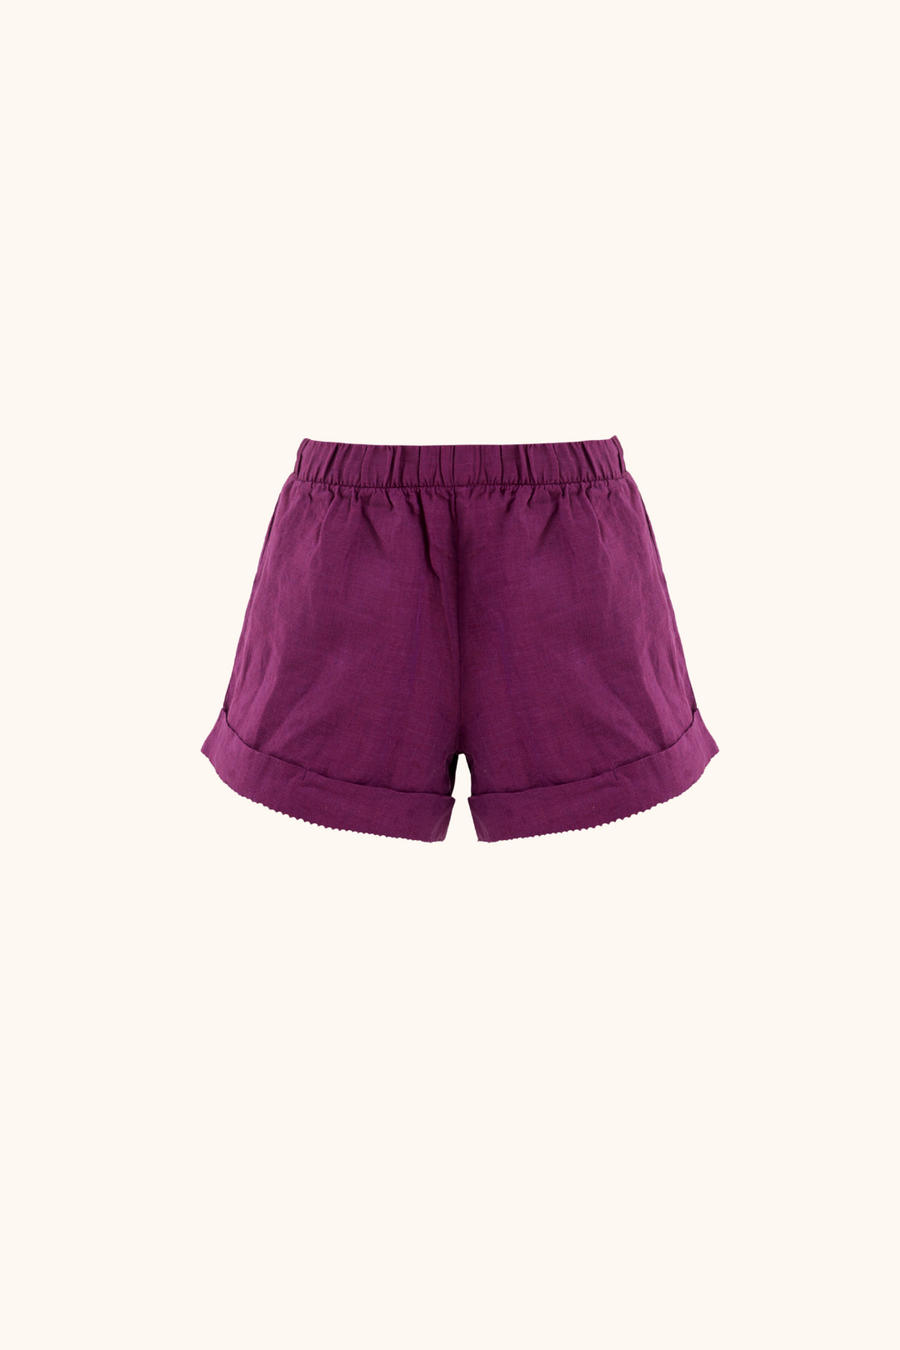 'Old Grape' Linen Shorts